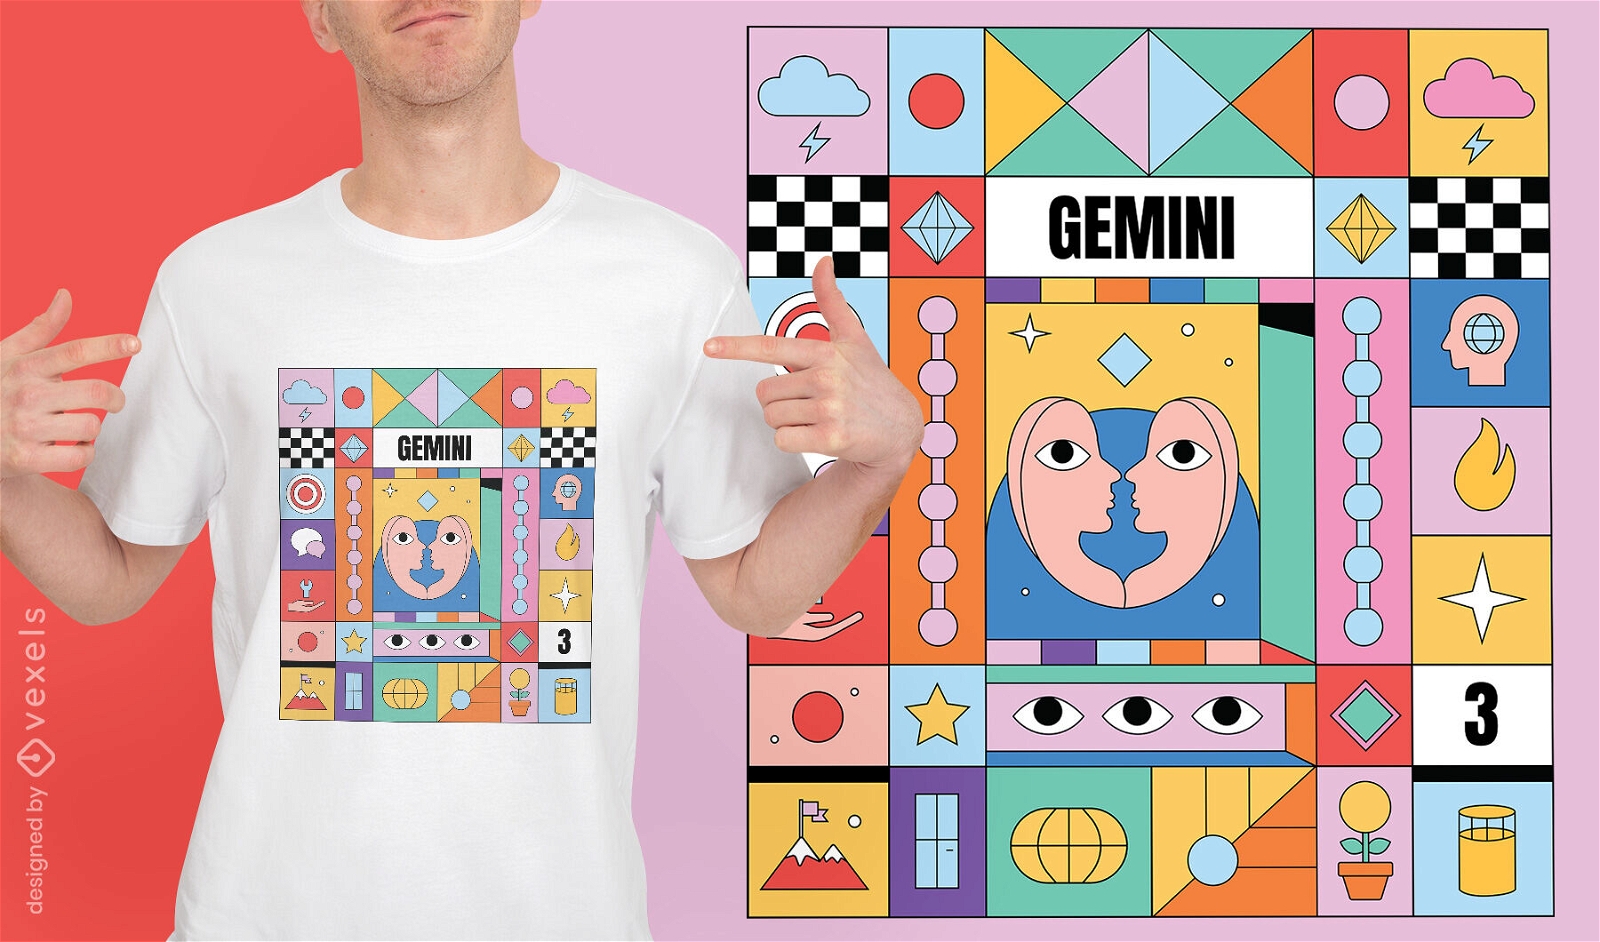 Gemini zodiac sign colorful t-shirt design